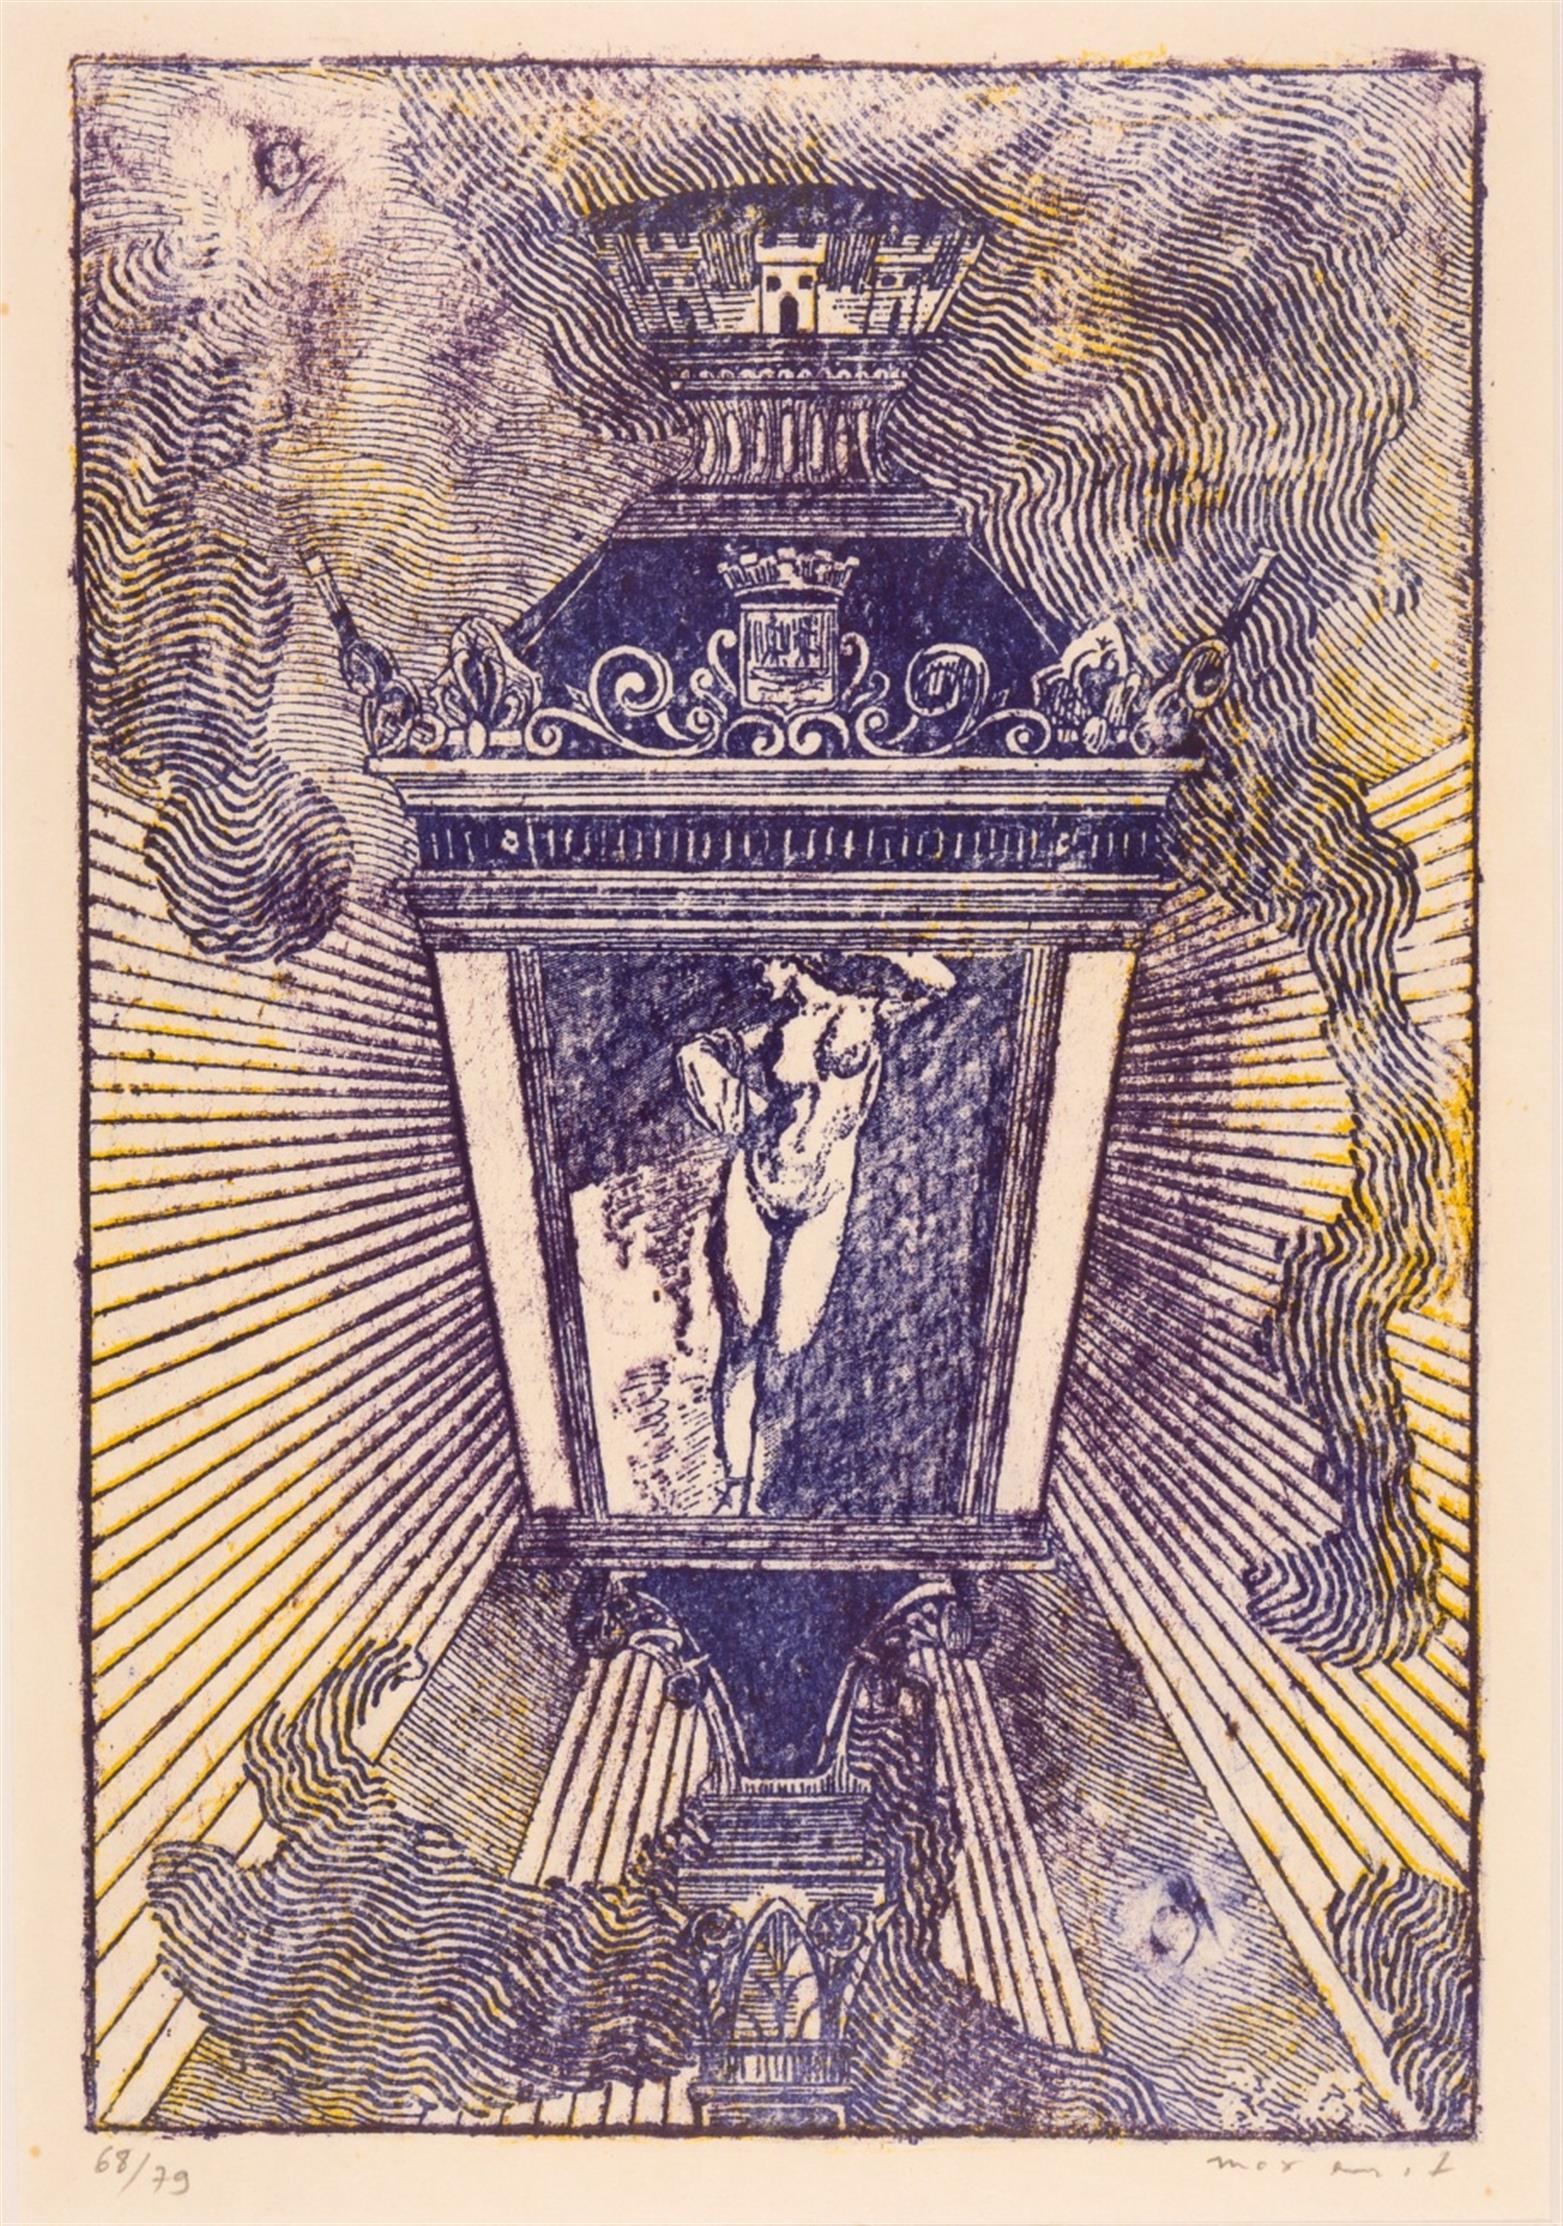 Artwork by Max Ernst, ZU: GEORGES RIBEMONT-DESSAIGNES, LA BALLADE DU SOLDAT, Made of color lithograph on Japan